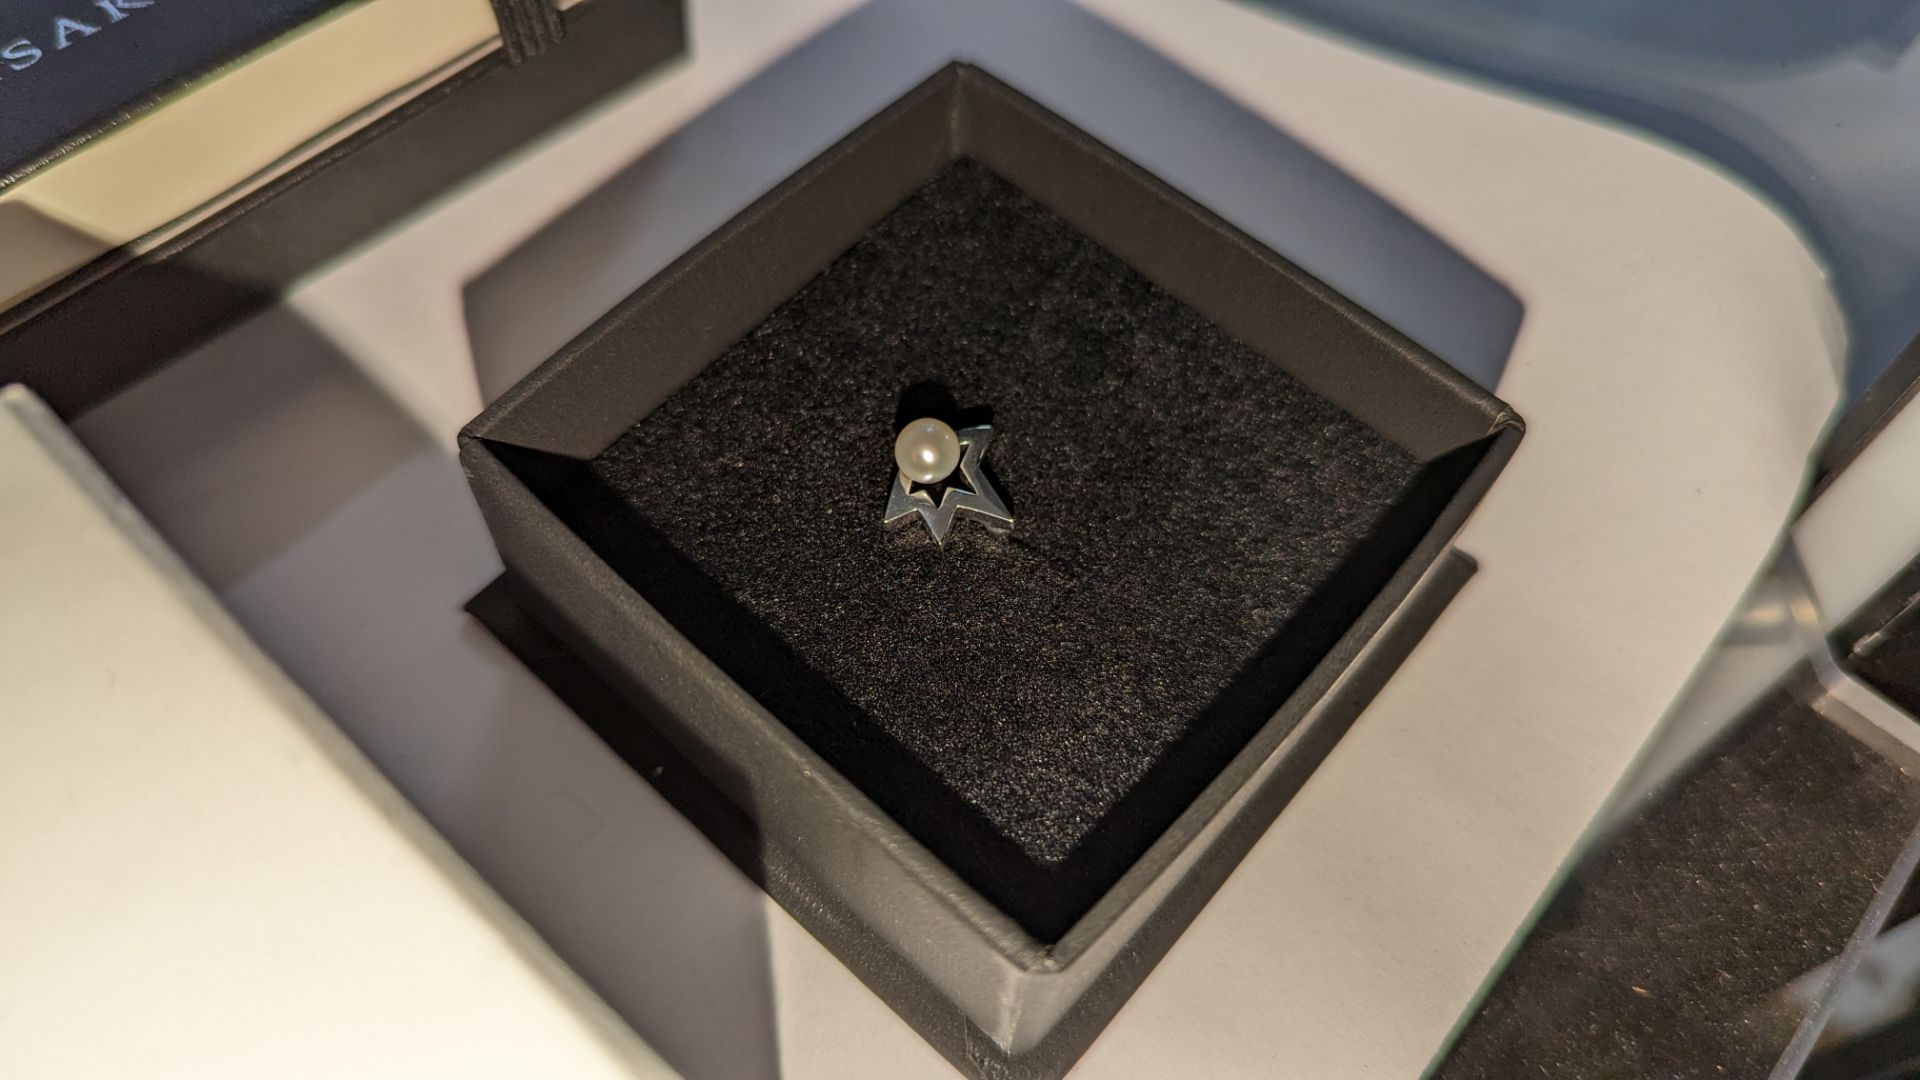 Tasaki small ring stamped 925, including presentation box, plus Tasaki moleskin notebook in its own - Image 3 of 11